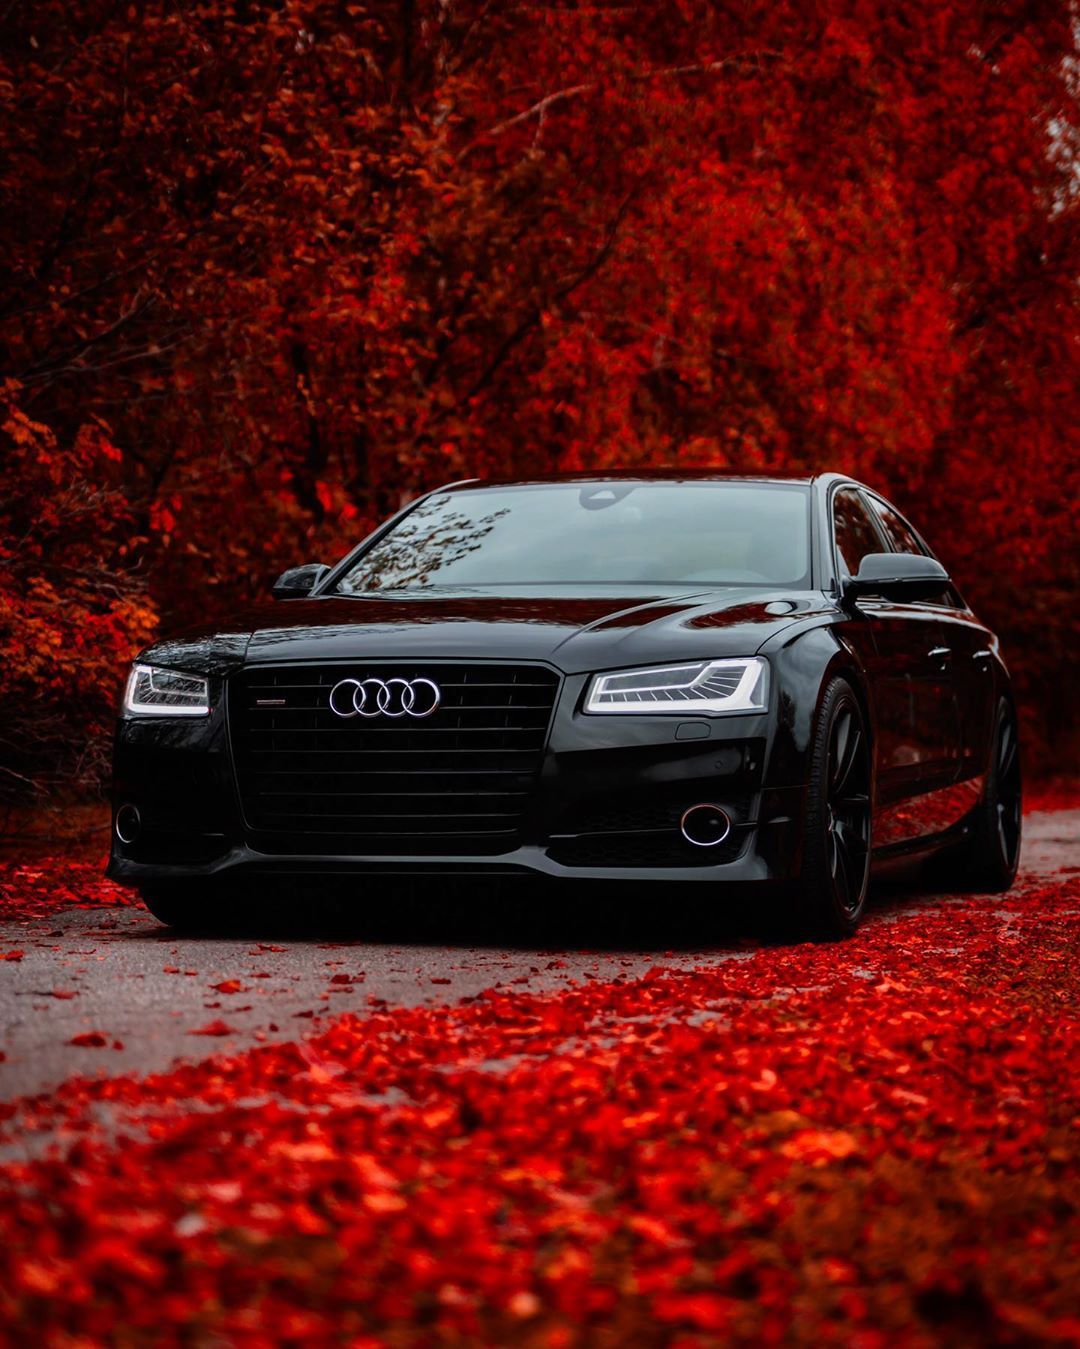 Audi A8 4H D4 4.2 V8 BiTDI on Instagram: “Happy Valentine